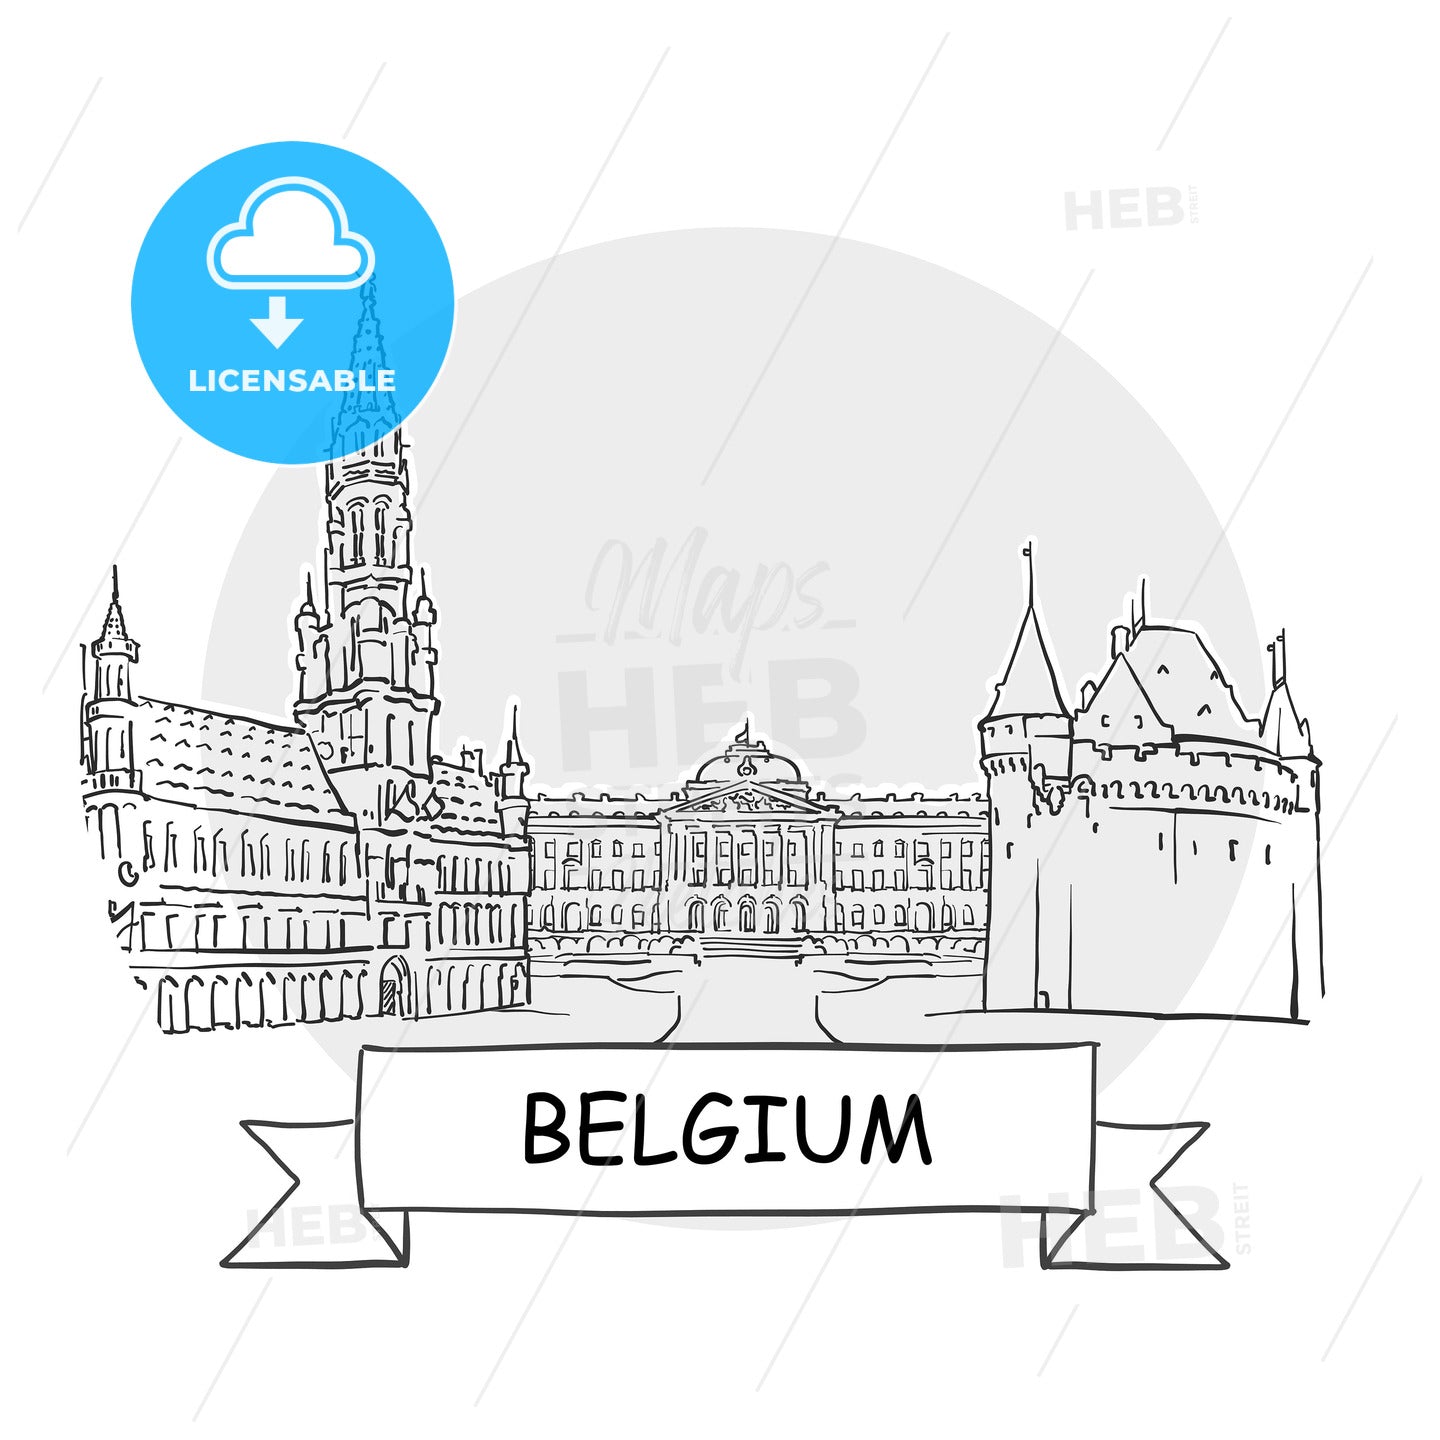 Belgium hand-drawn urban vector sign – instant download